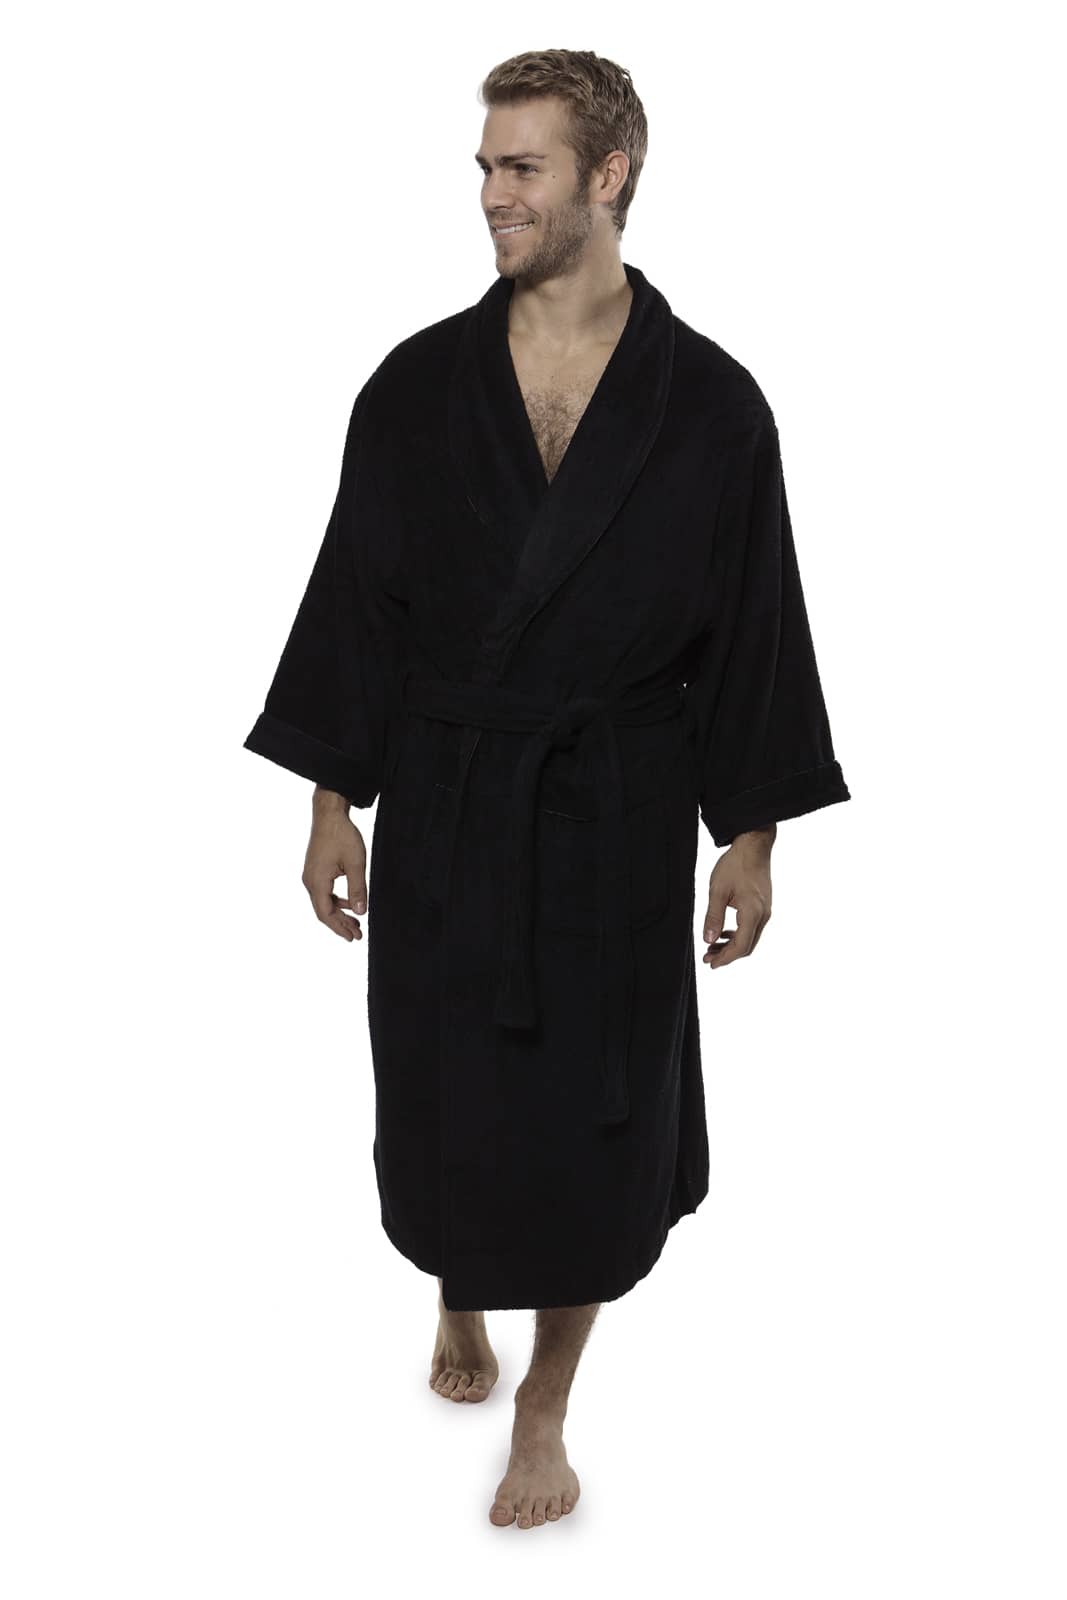 Texere Men's Terry Cloth Bathrobe Mens>Sleepwear>Robe Fishers Finery Black S/M 